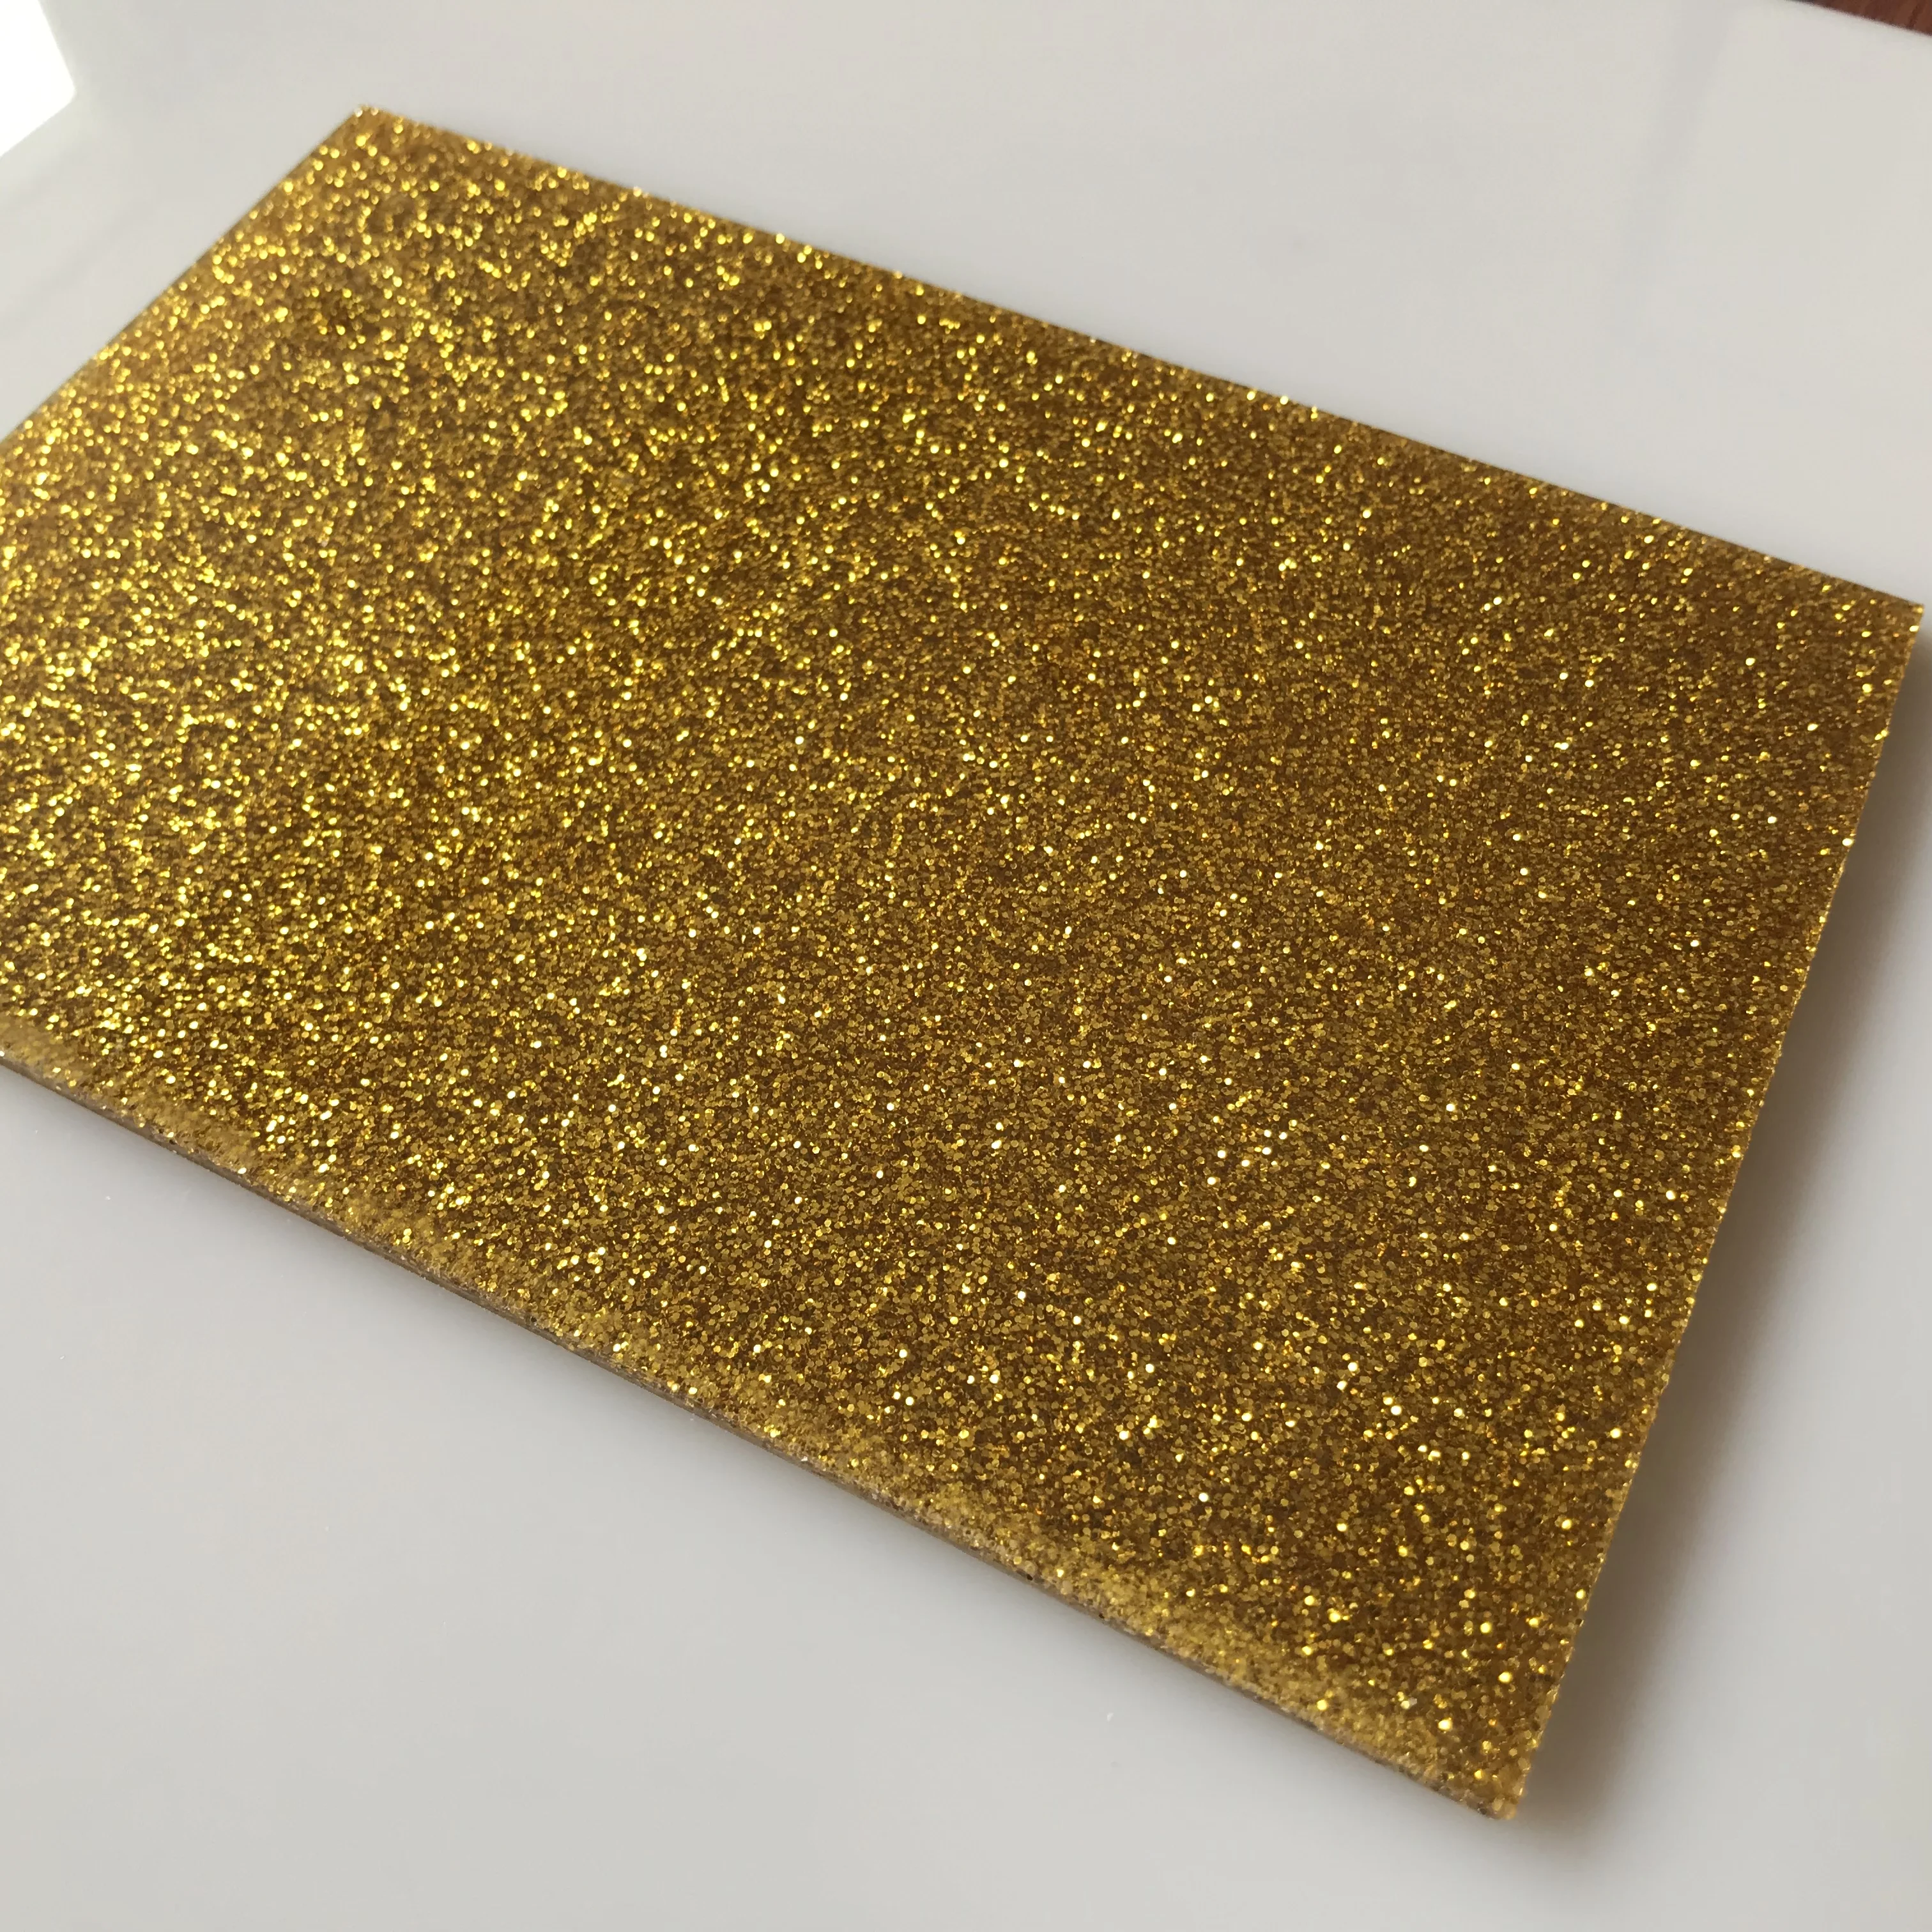 Glitter topped acrylic board